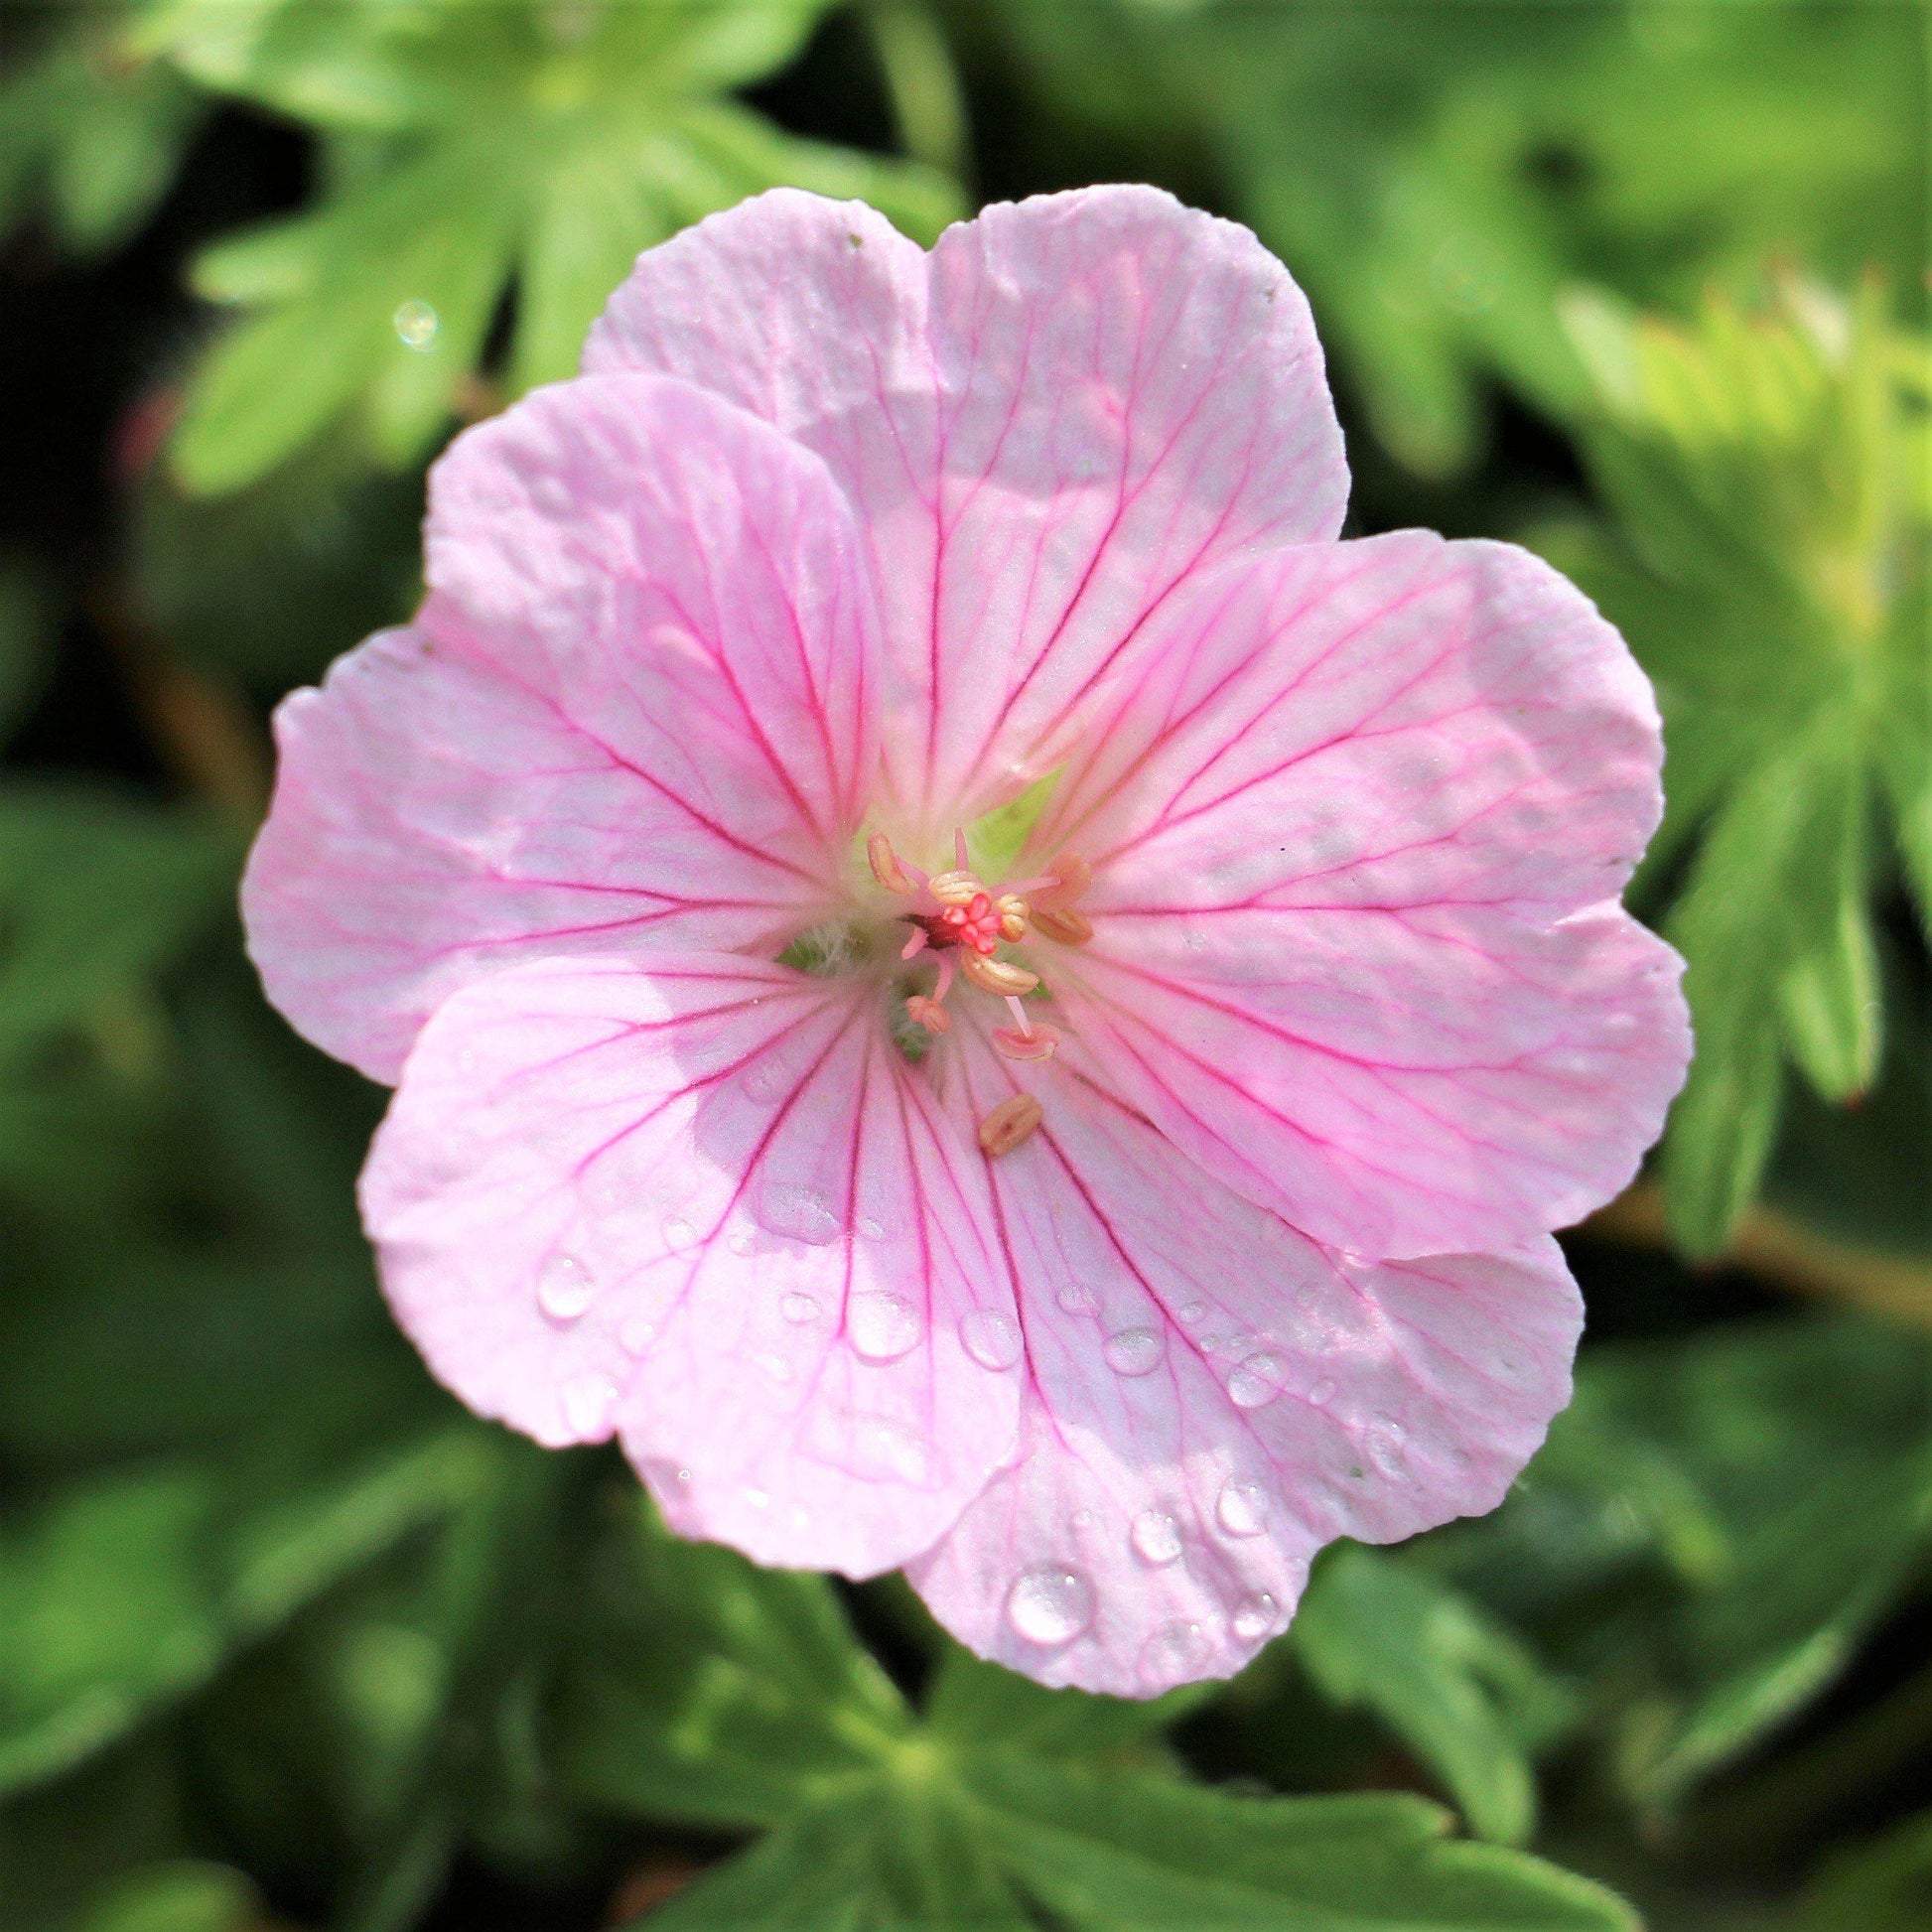 Dew-Covered light pink "Wargrave Pink" Geranium